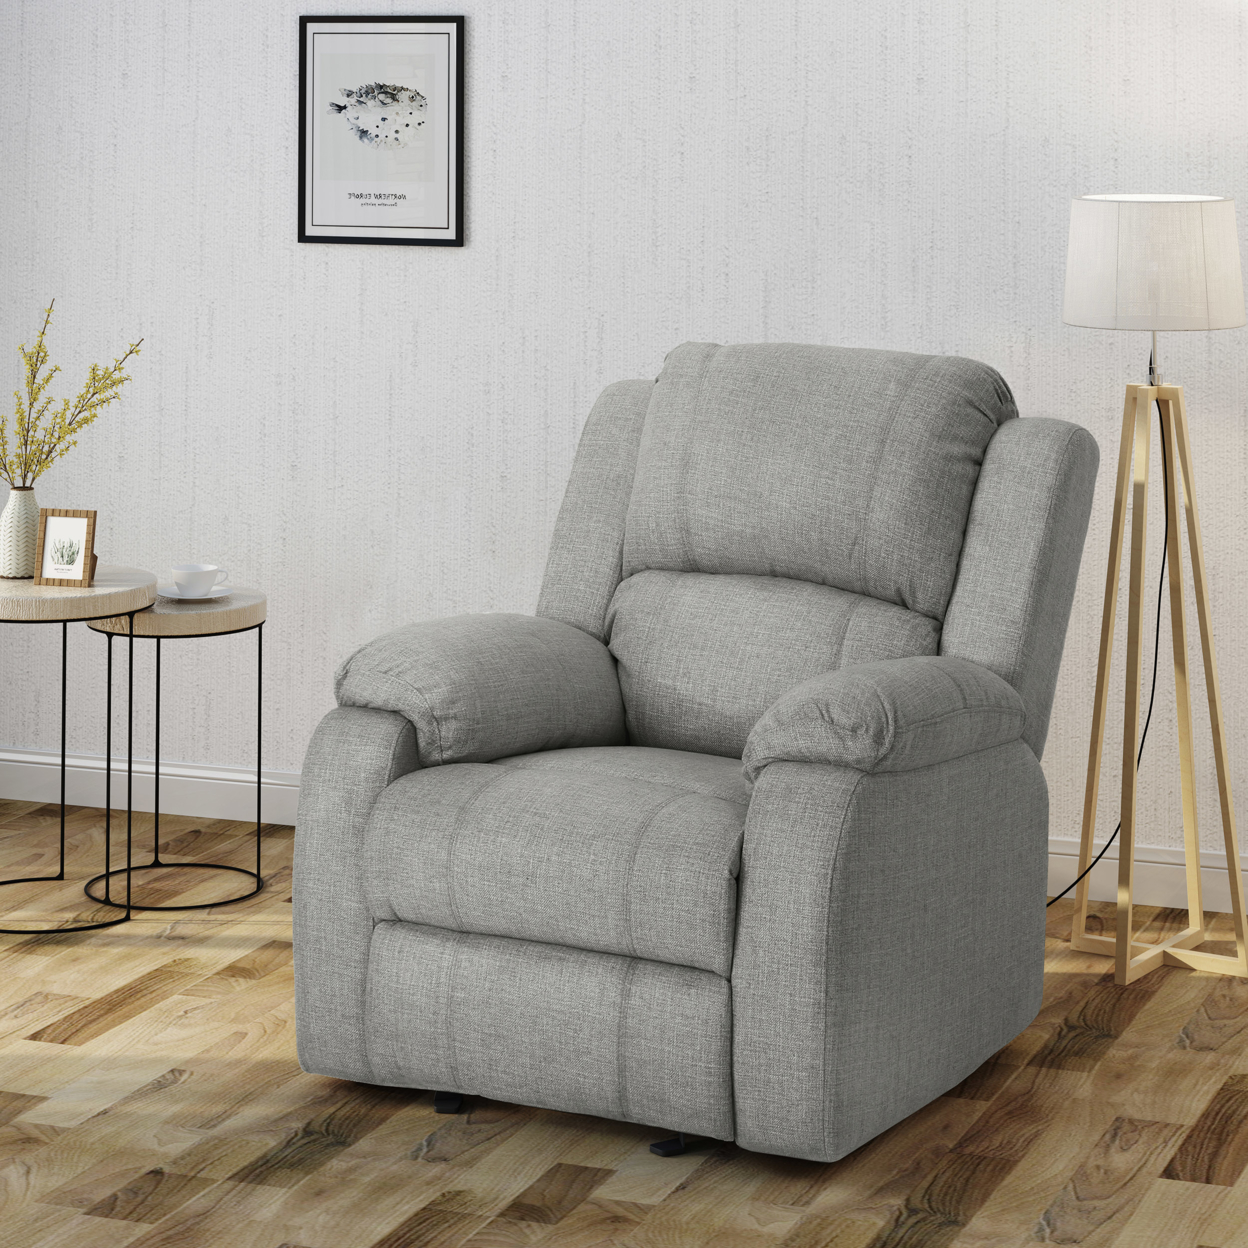 Scarlett Classic Fabric Gliding Recliner Chair - Gray